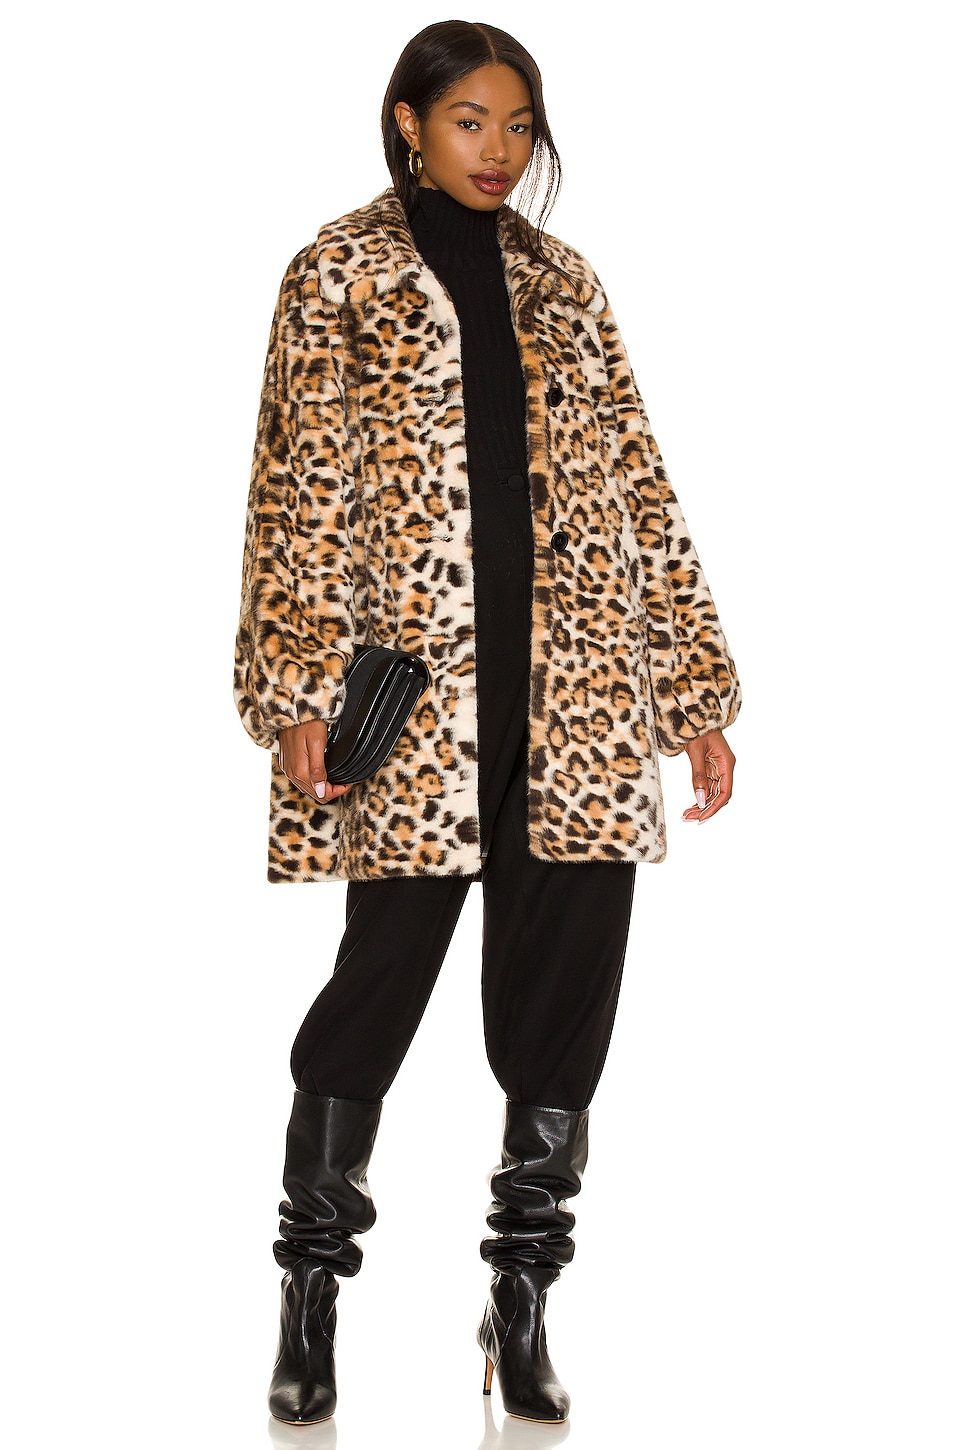 House of Harlow 1960 x REVOLVE Loren Coat in Leopard | REVOLVE